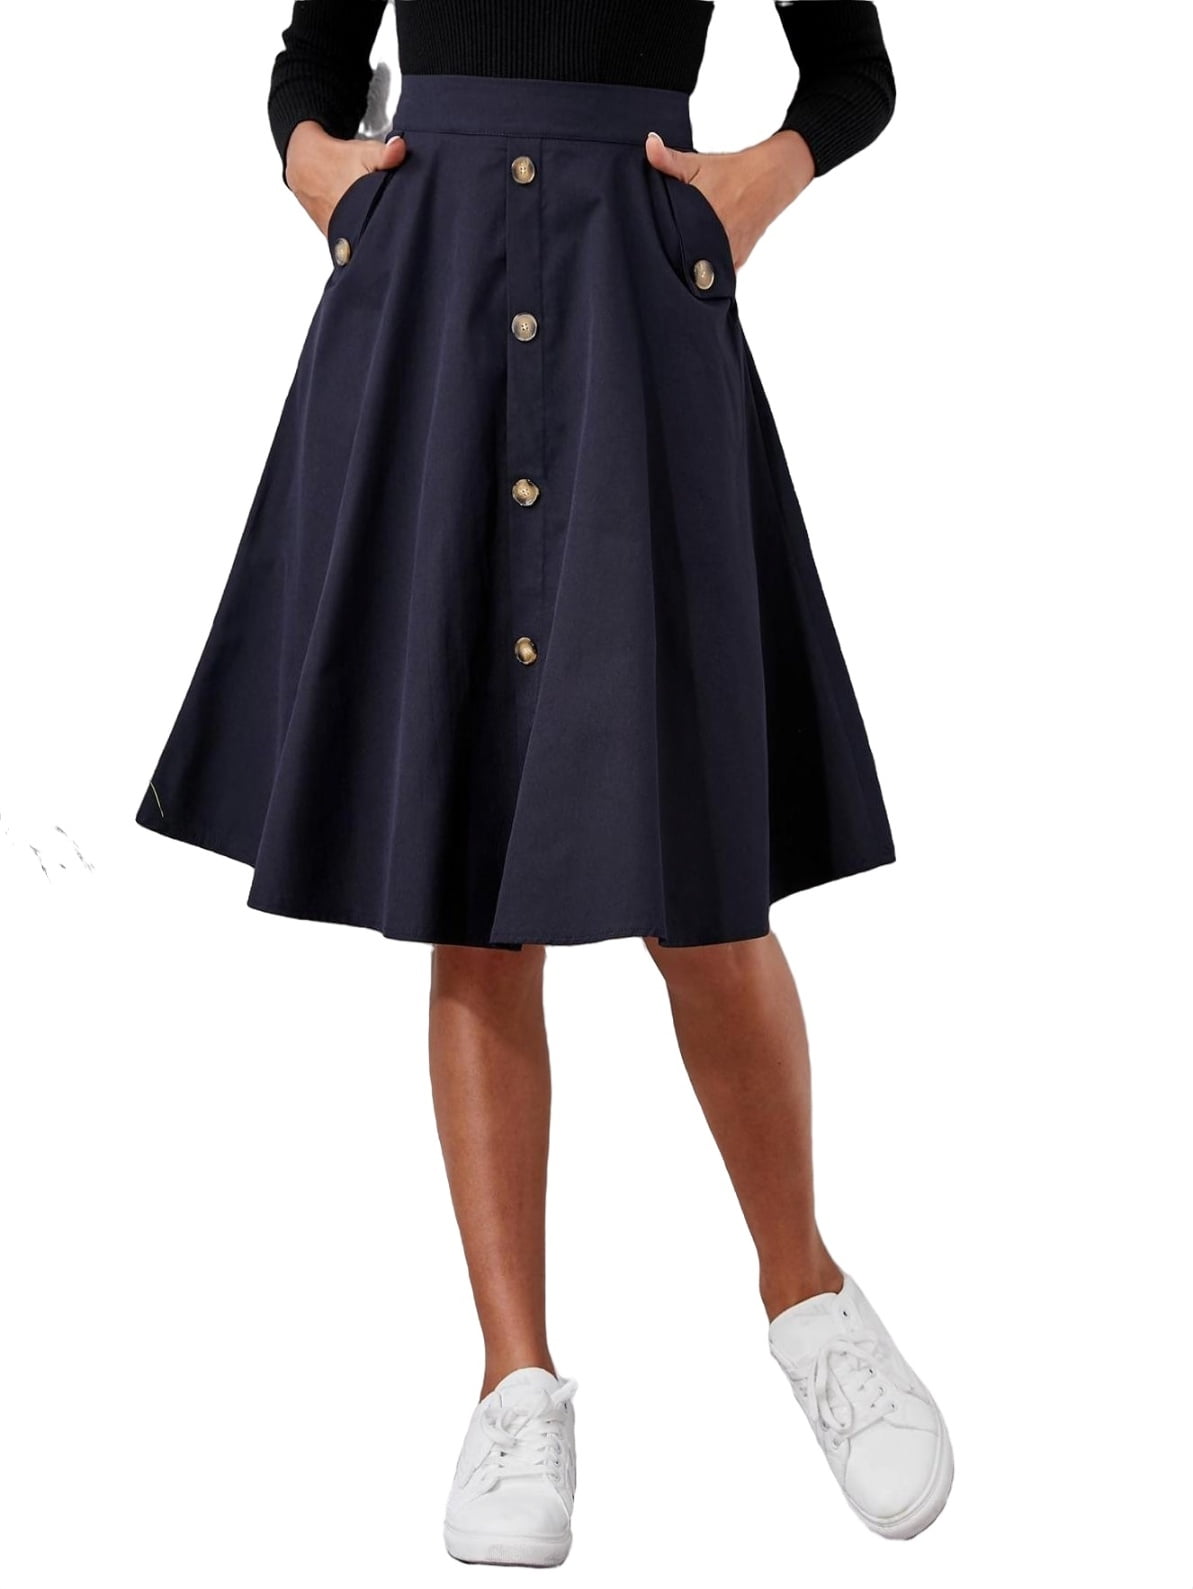 Womens Pocket Skirts Elegant High Waist Knee Length Navy Blue